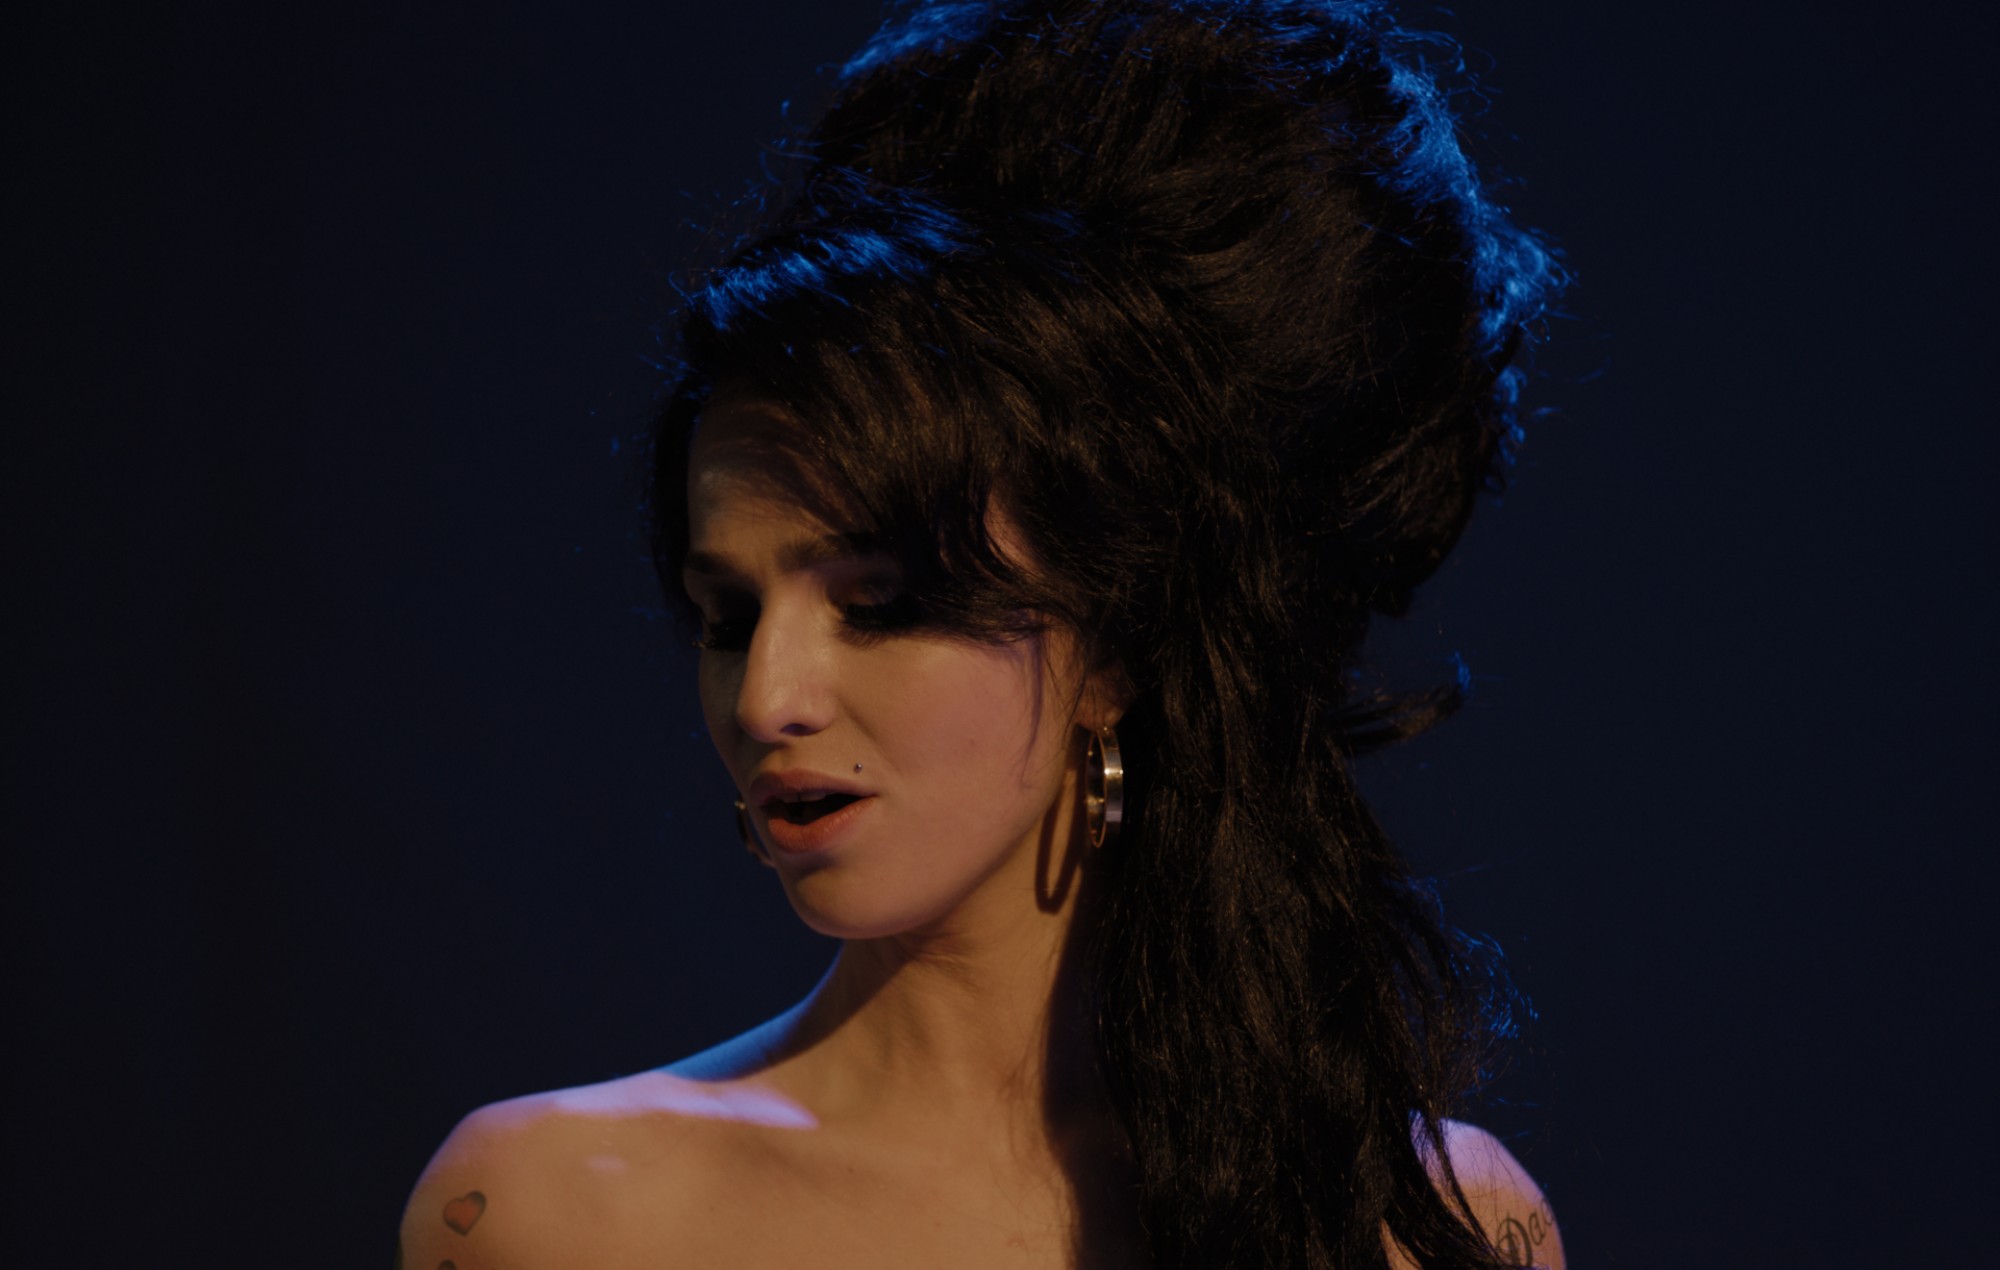 Marisa Abel interpreta a Amy Winehouse en la película biográfica "Back To Black